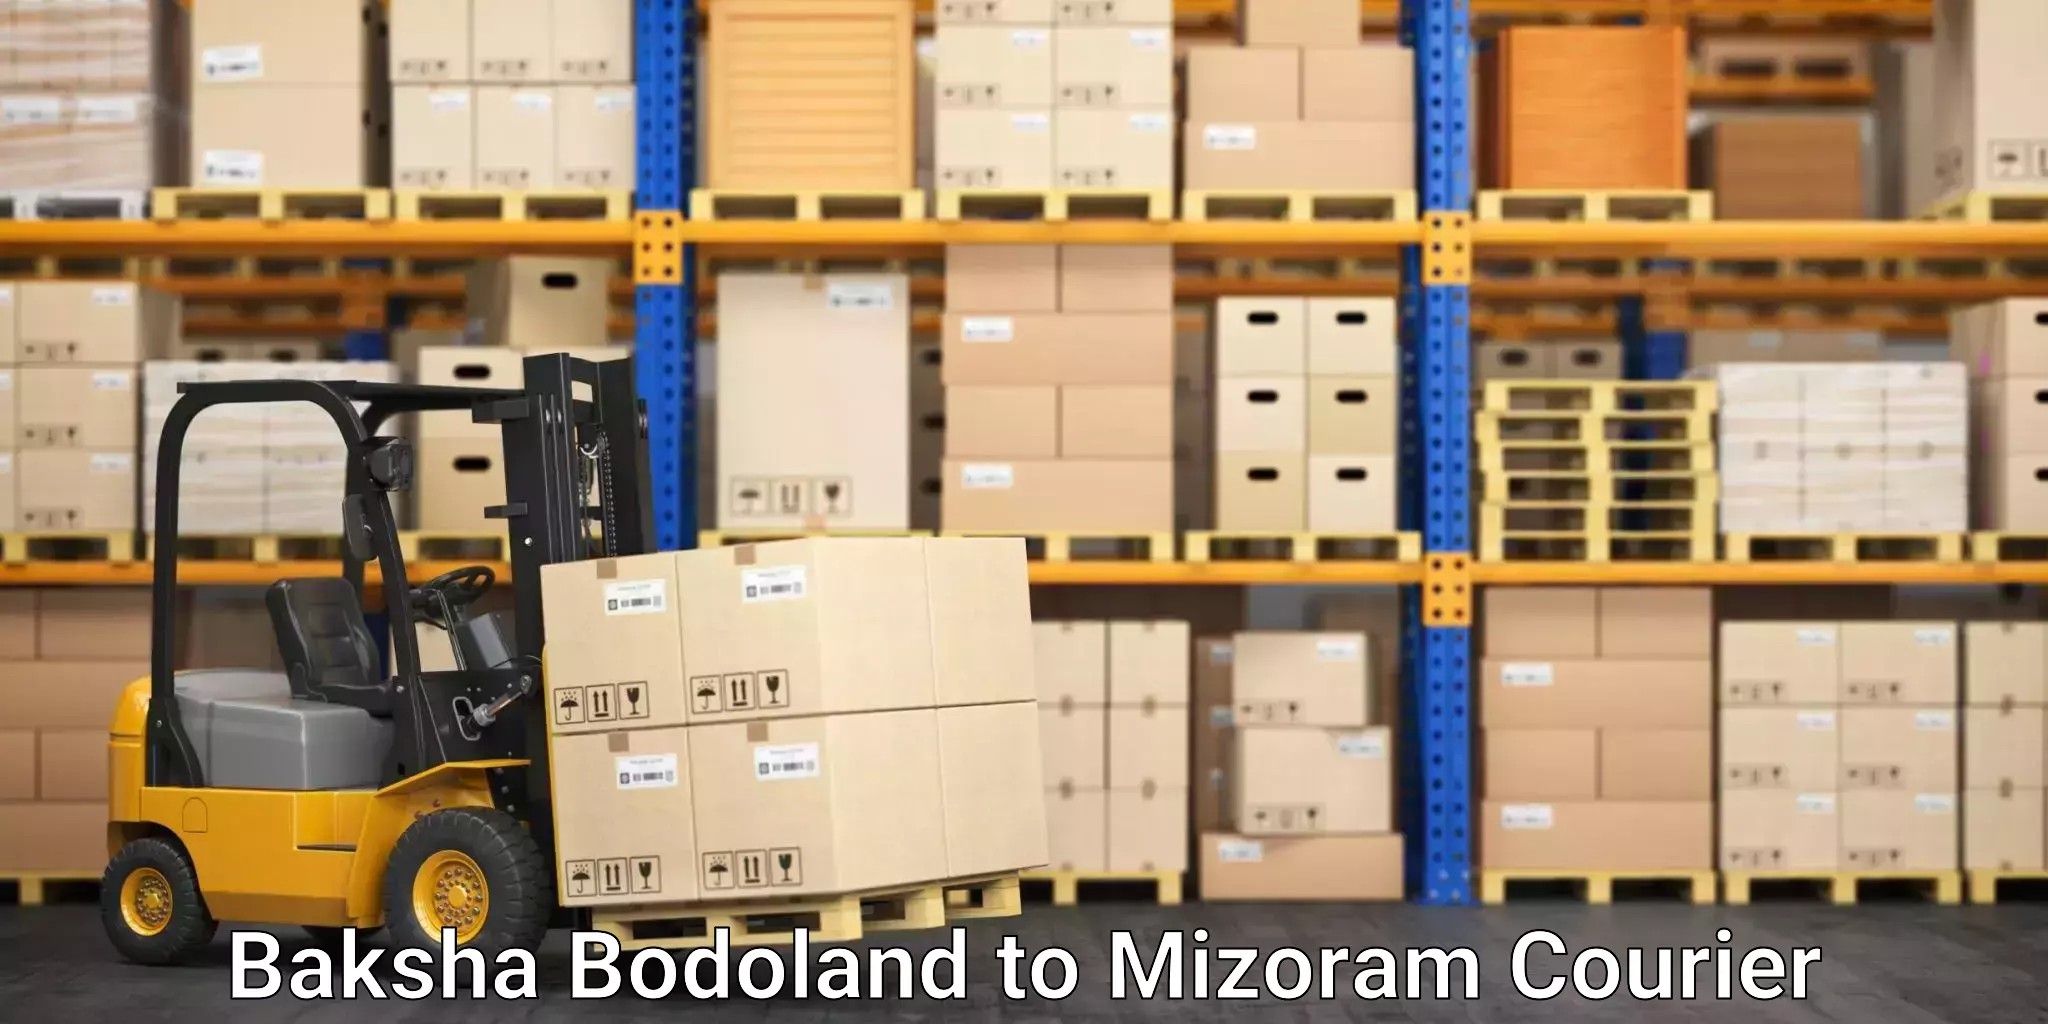 Reliable shipping partners Baksha Bodoland to Mizoram